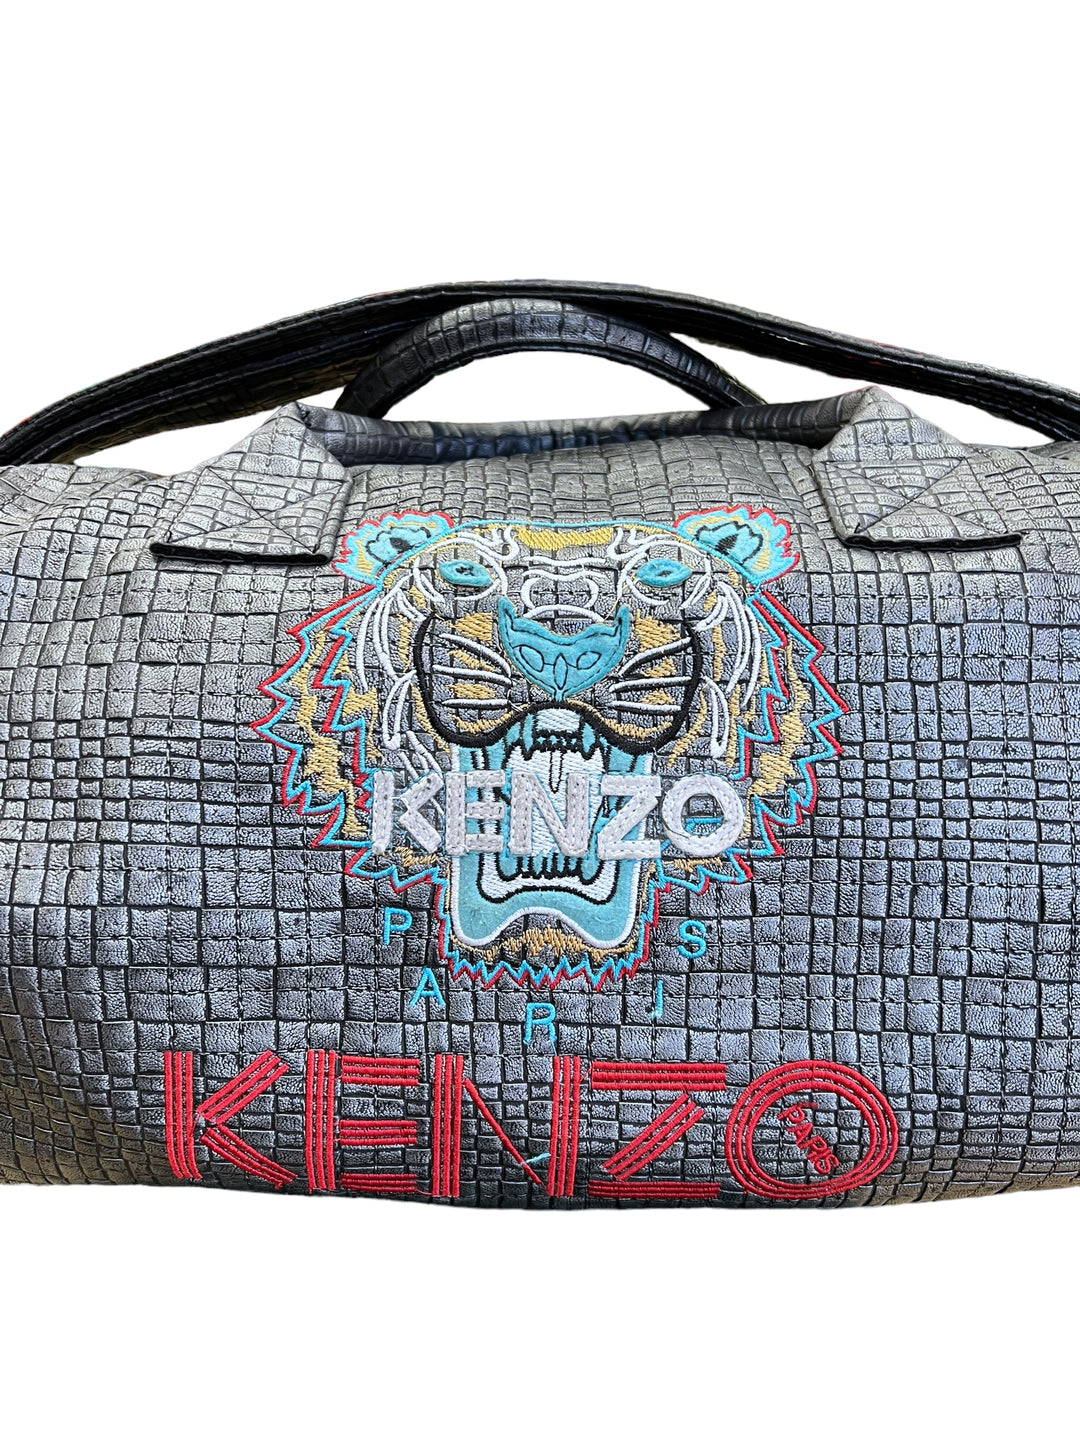 KENZO embroidered duffle bag